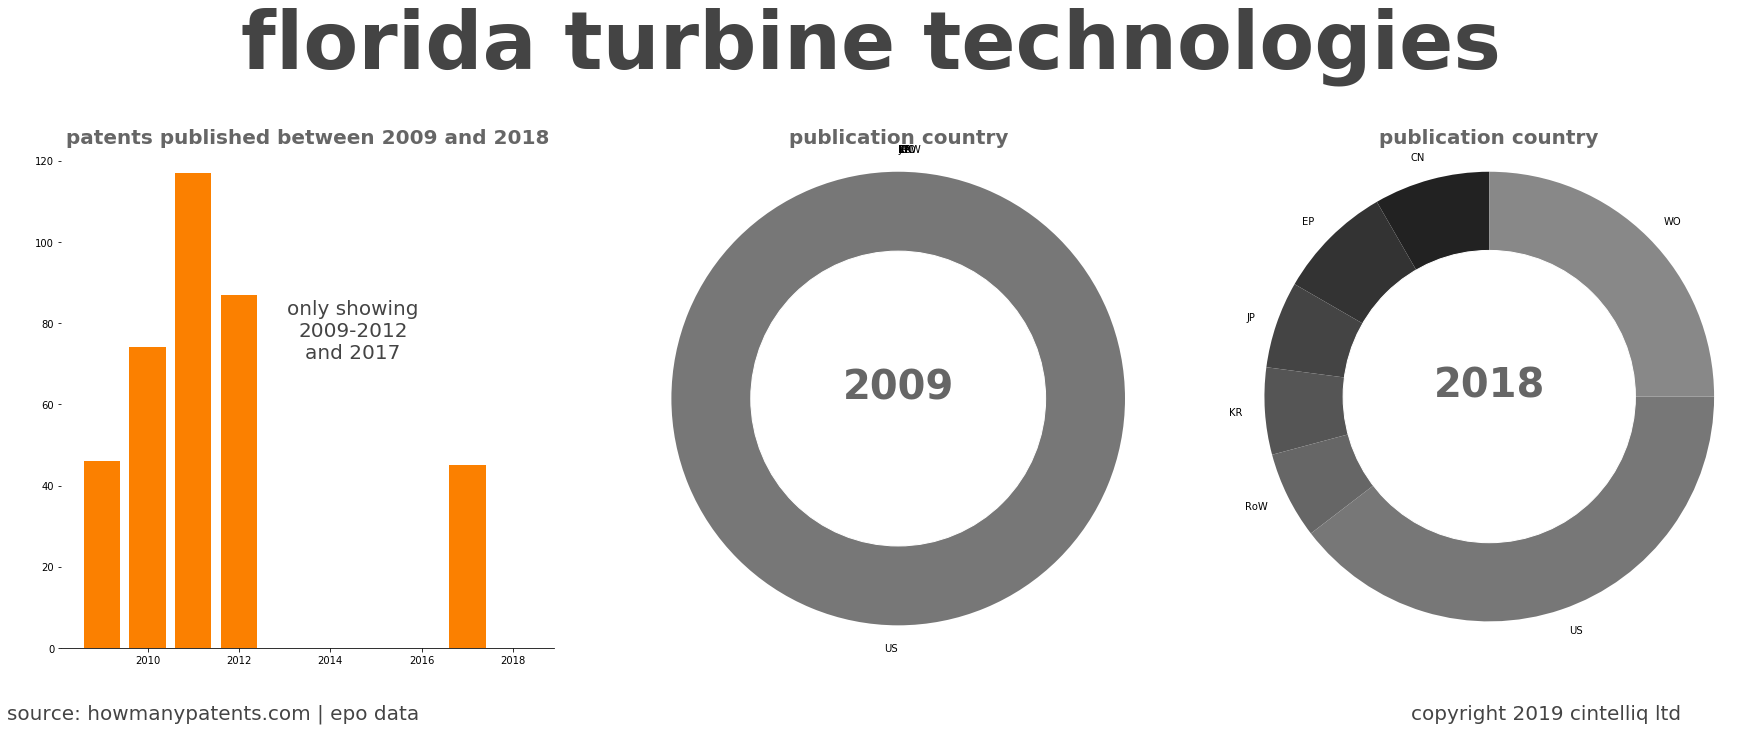 summary of patents for Florida Turbine Technologies